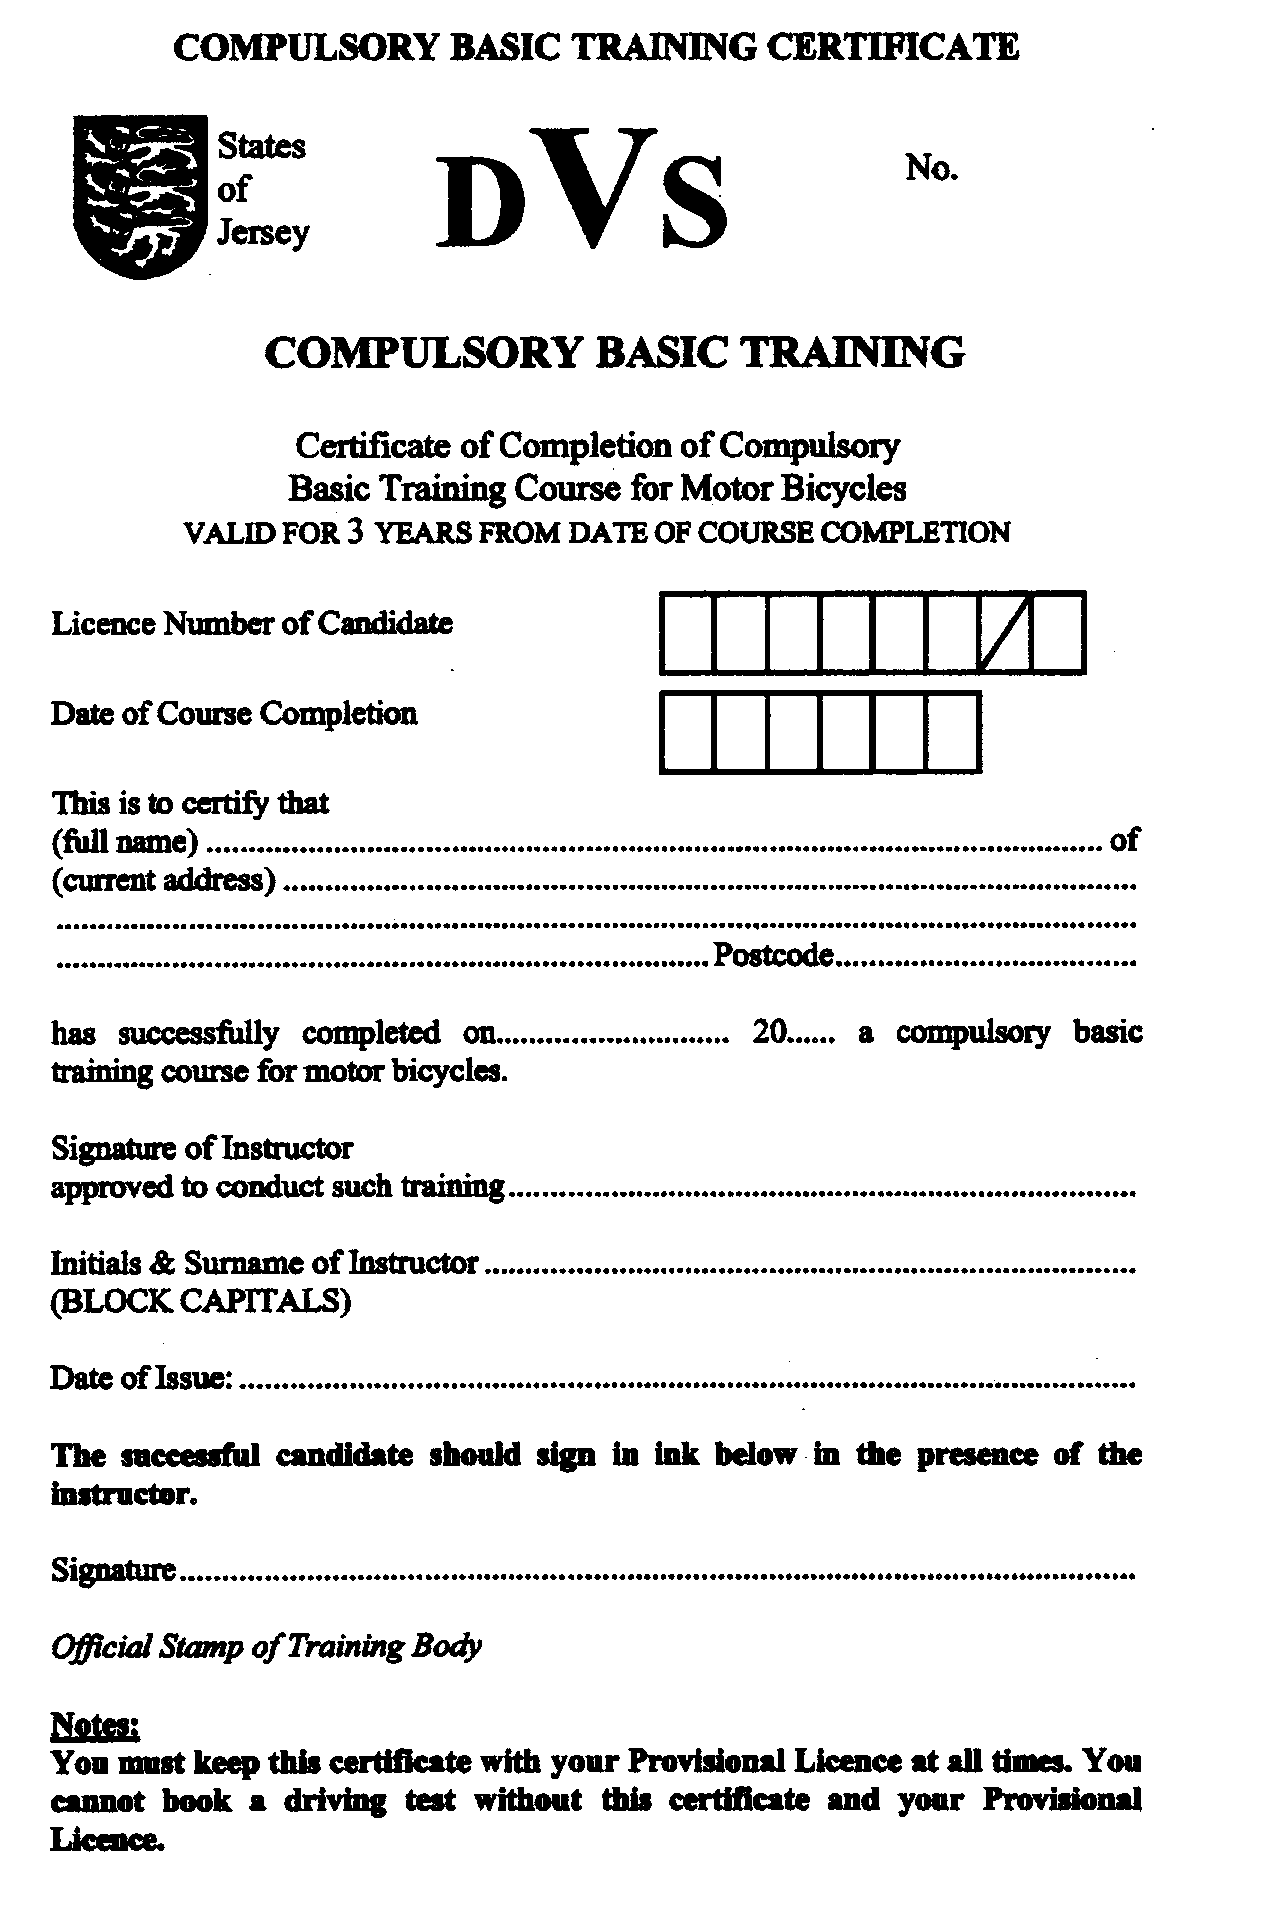 Compulsory Basic Training Certificate